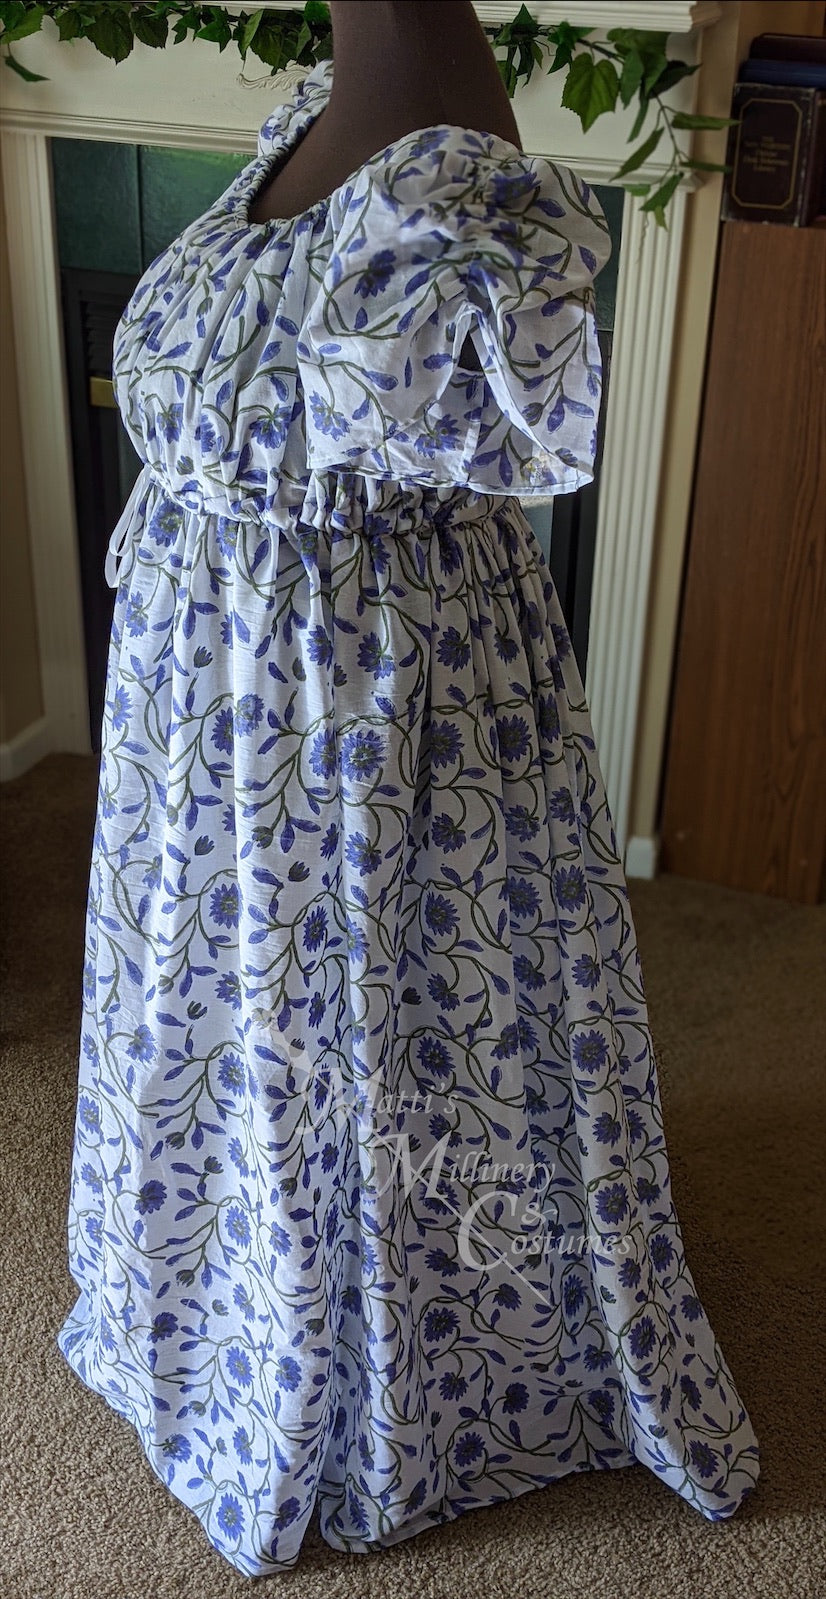 Periwinkle Green Magic Round Gown Block Print Cotton Regency Jane Austen Day Dress